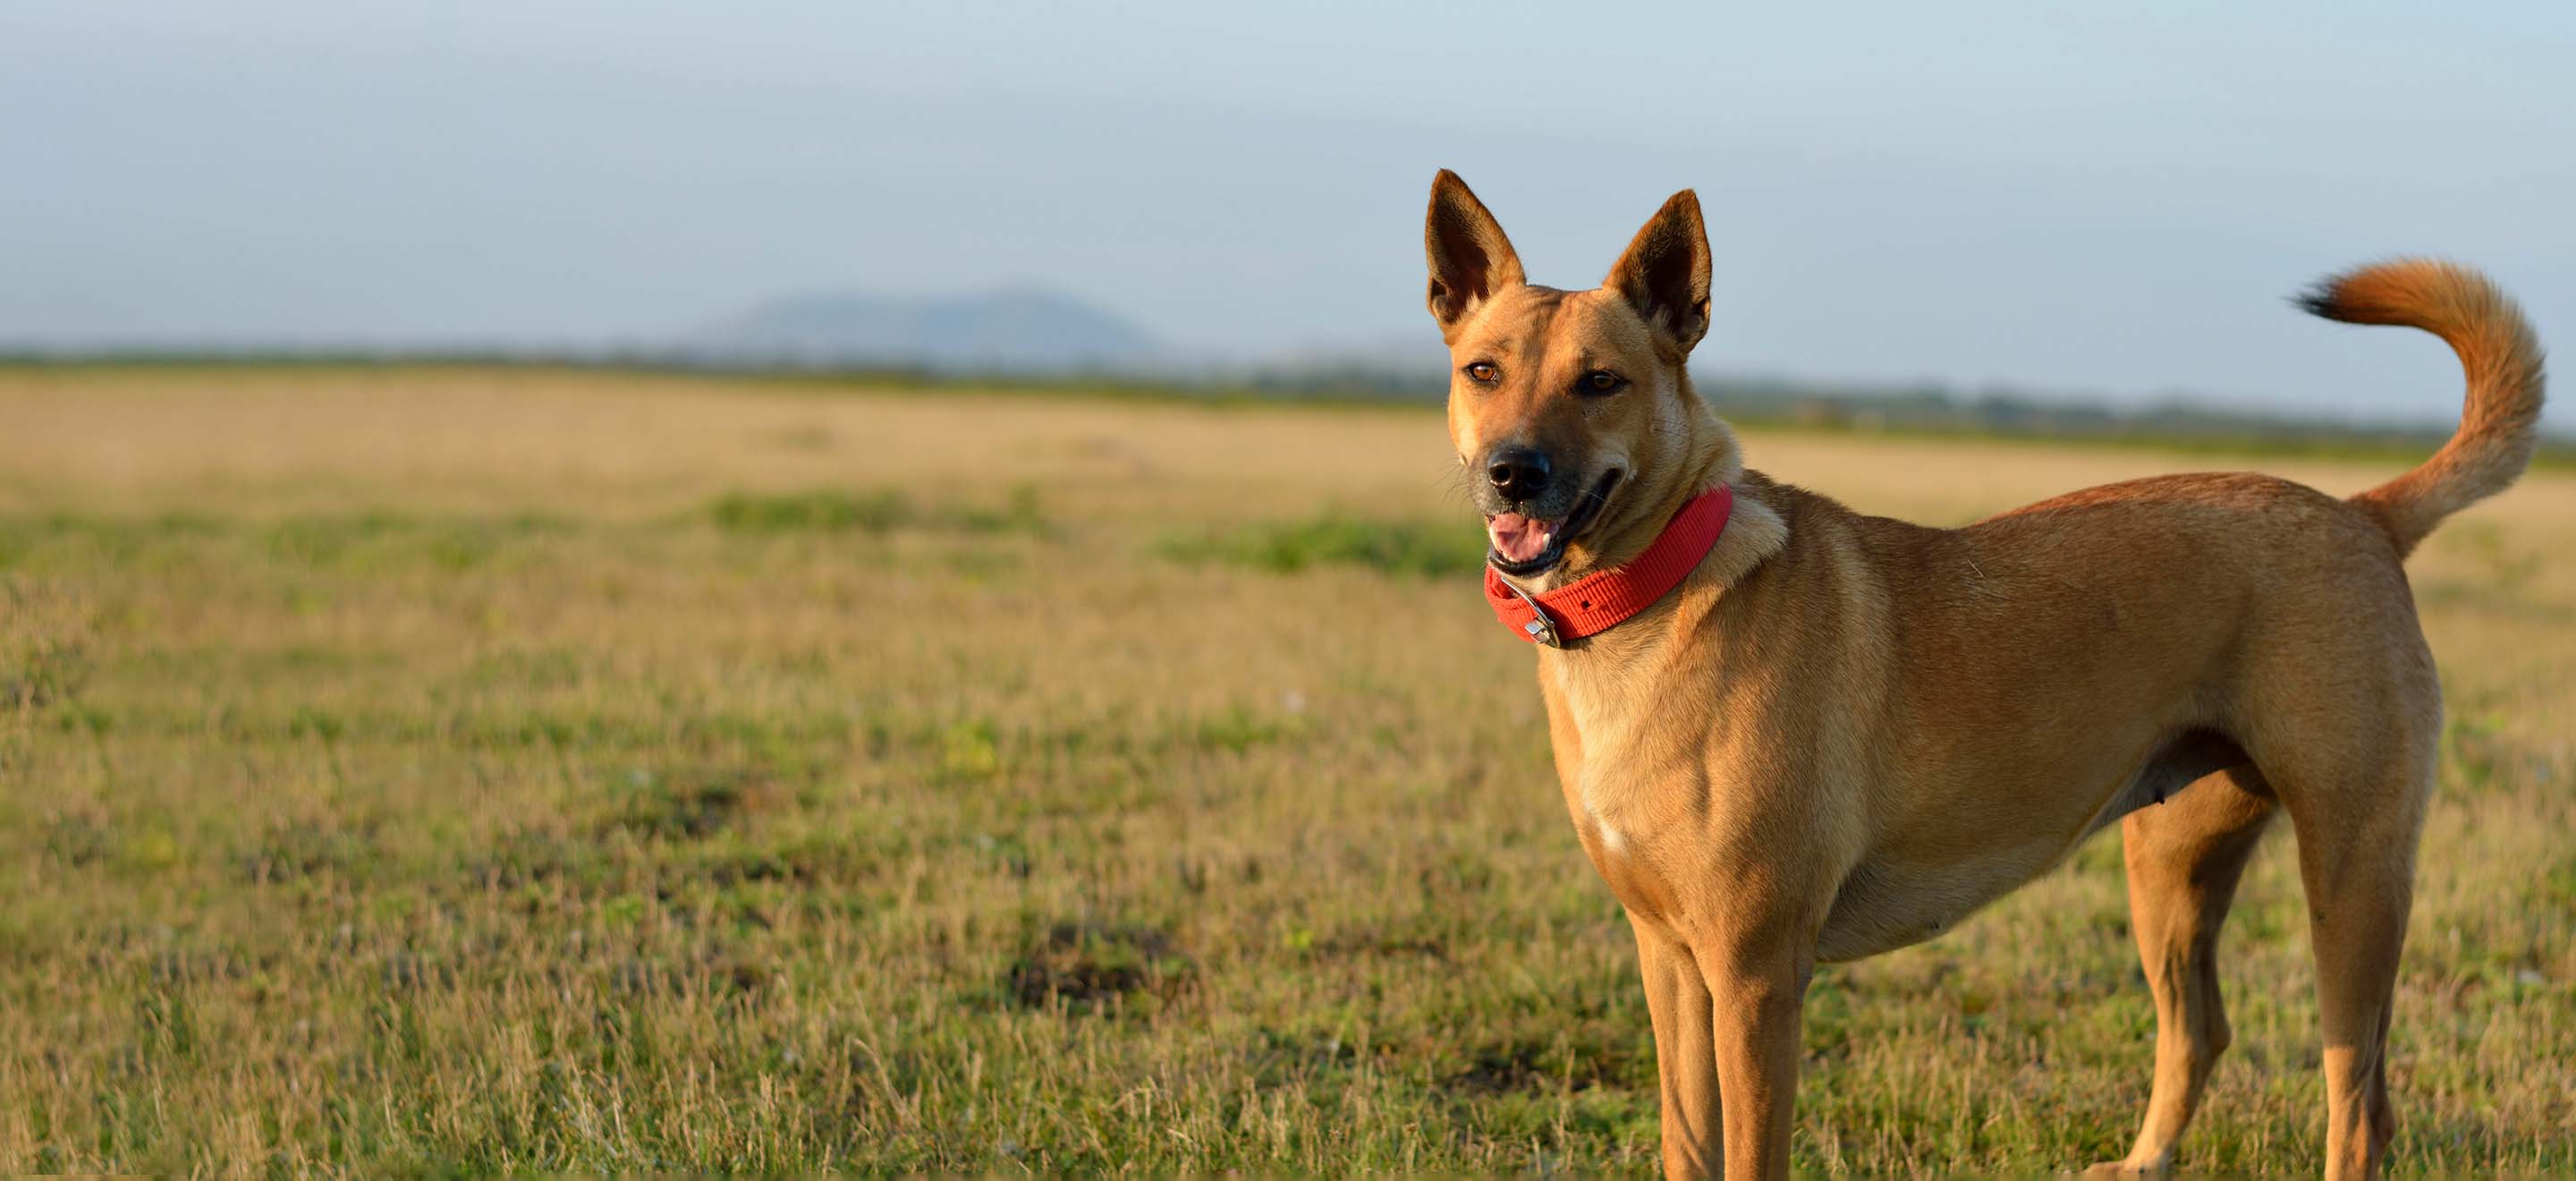 Carolina dog standing in a prairie smiling image